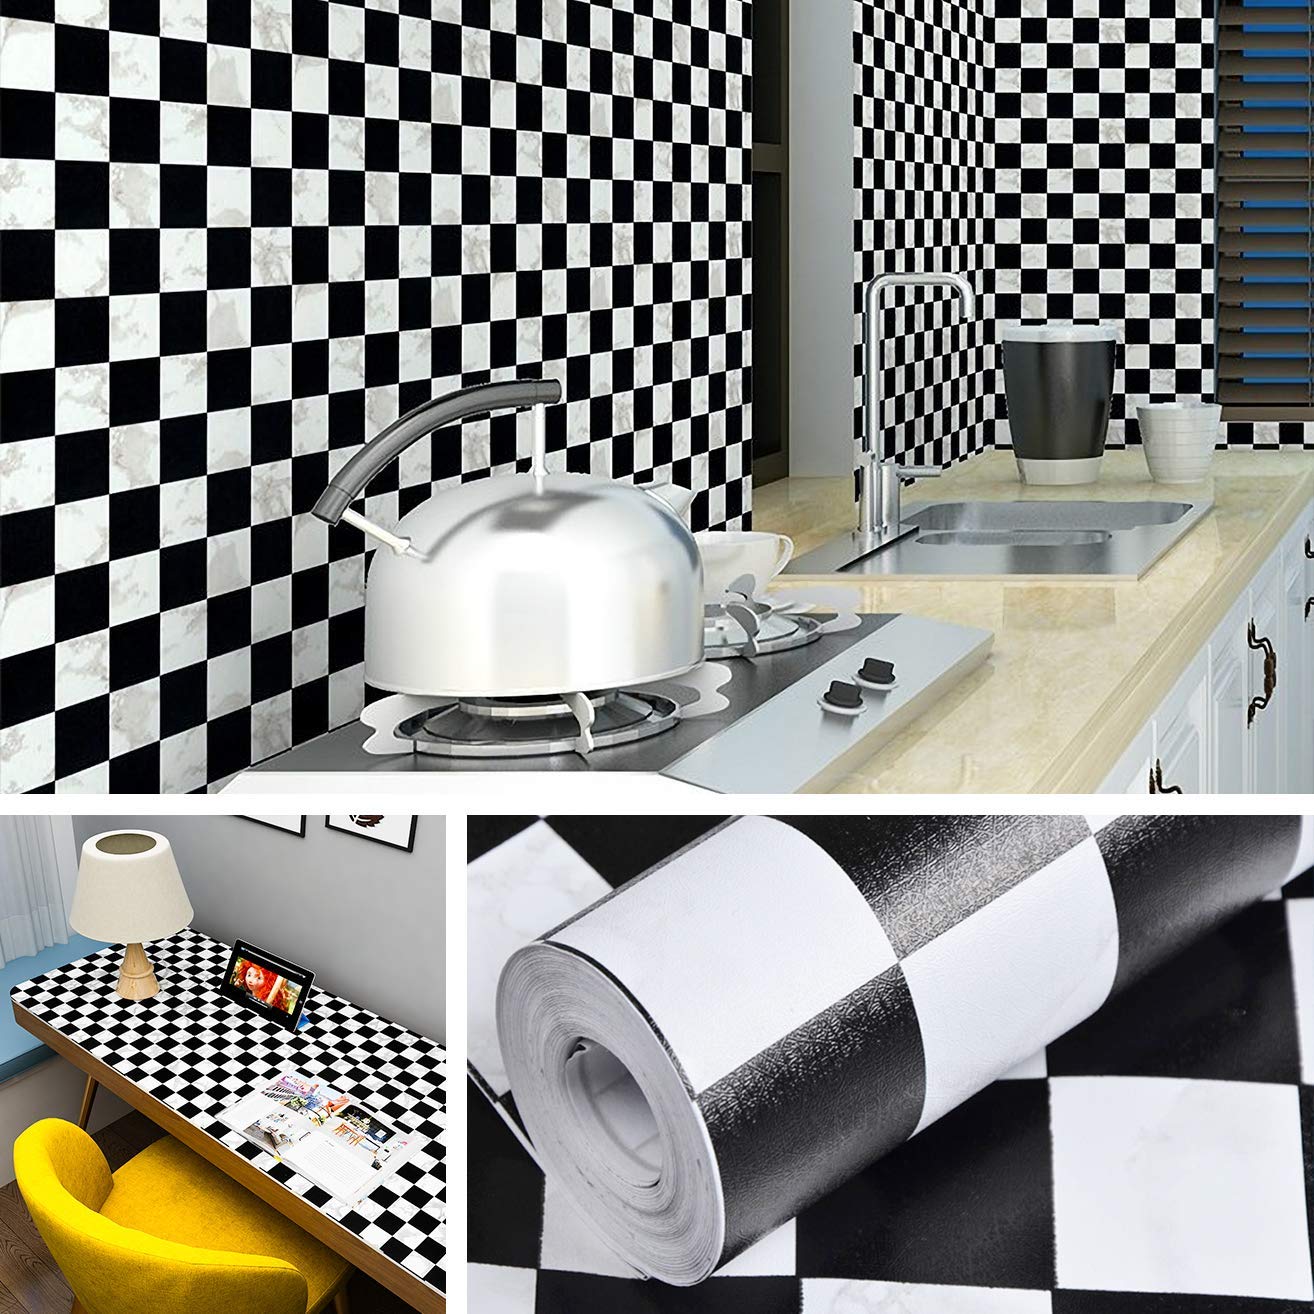 Livelynine Checkered Wallpaper Peel And Stick Bathroom Backsplash